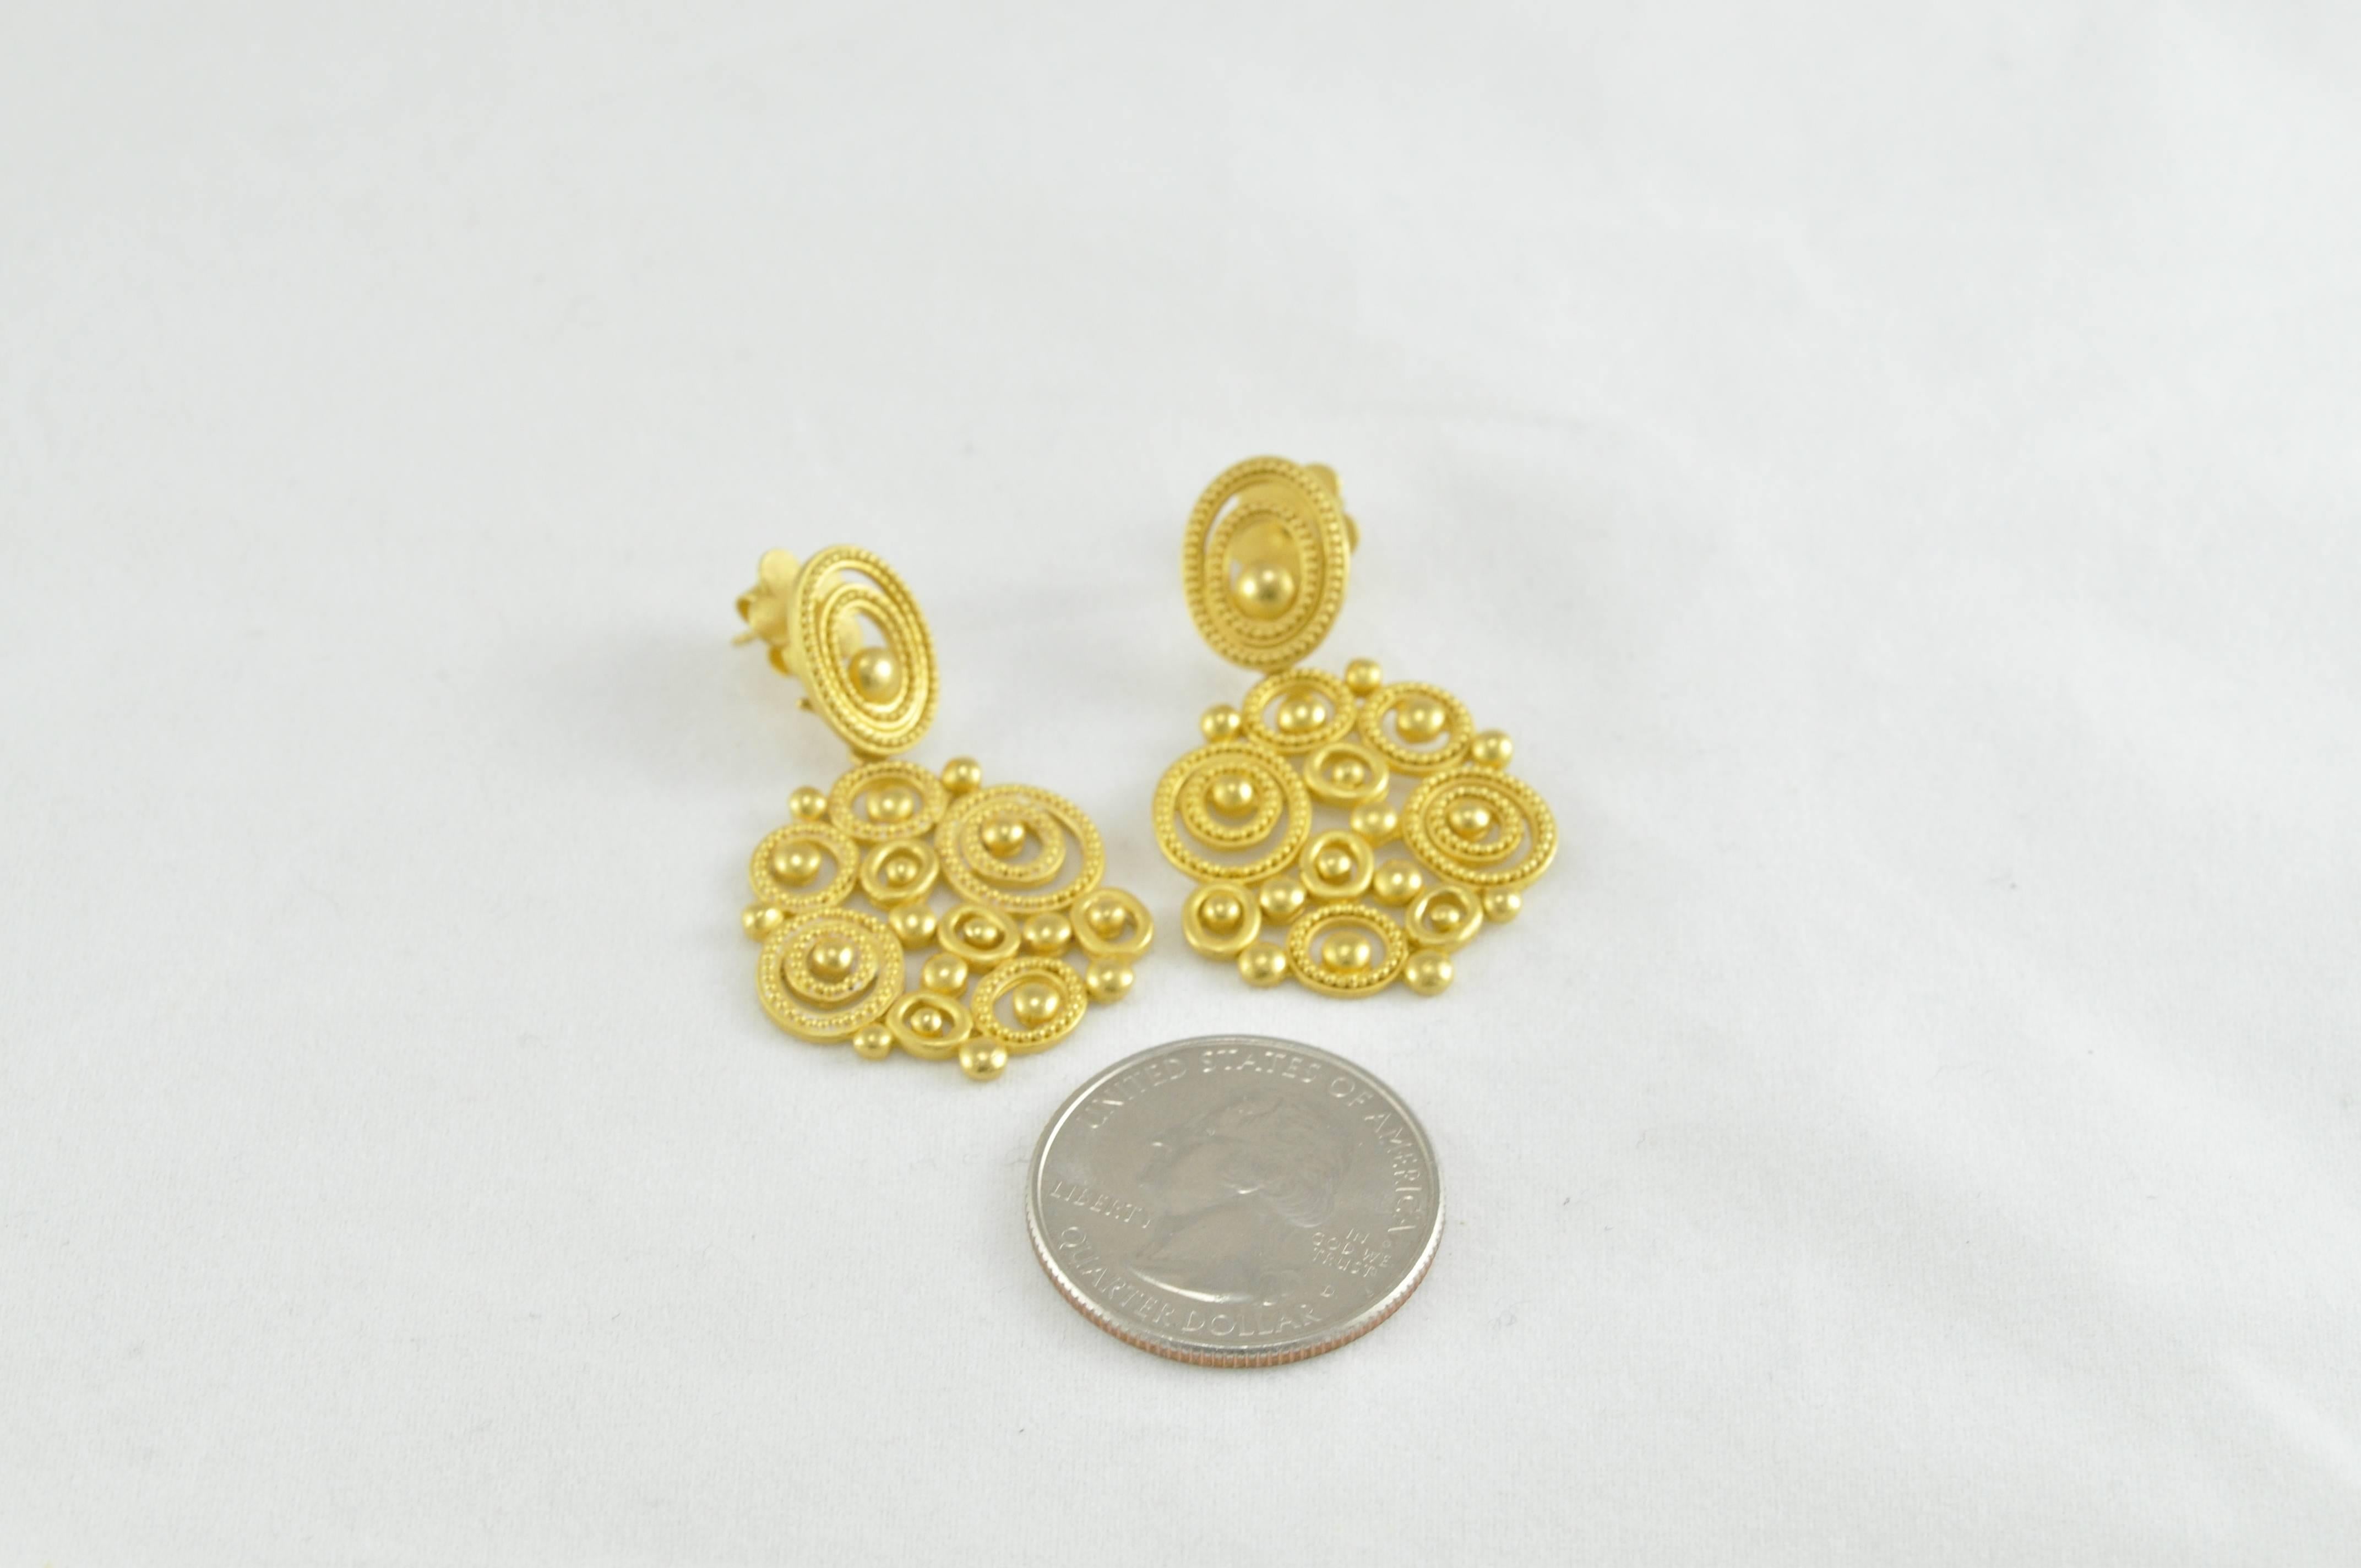 Carolyn Tyler Dune; Chandelier Gold Earrings. For pierced ears.  22k Gold Earrings with intricate, detailed beading work.  